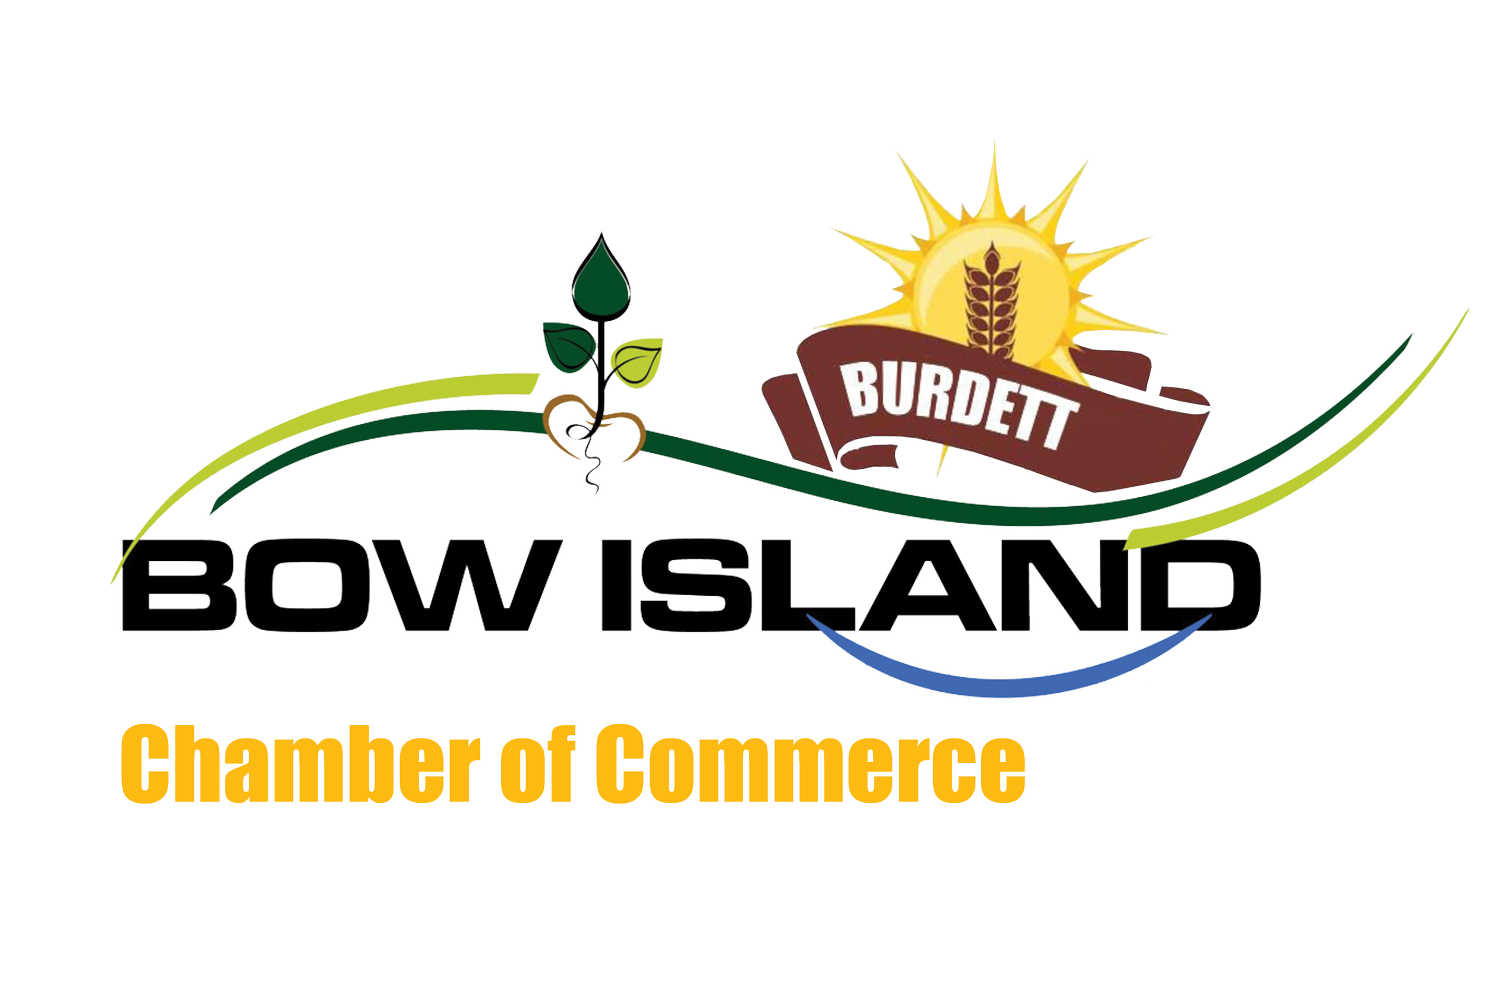 Bow Island Burdett Chamber of Commerce